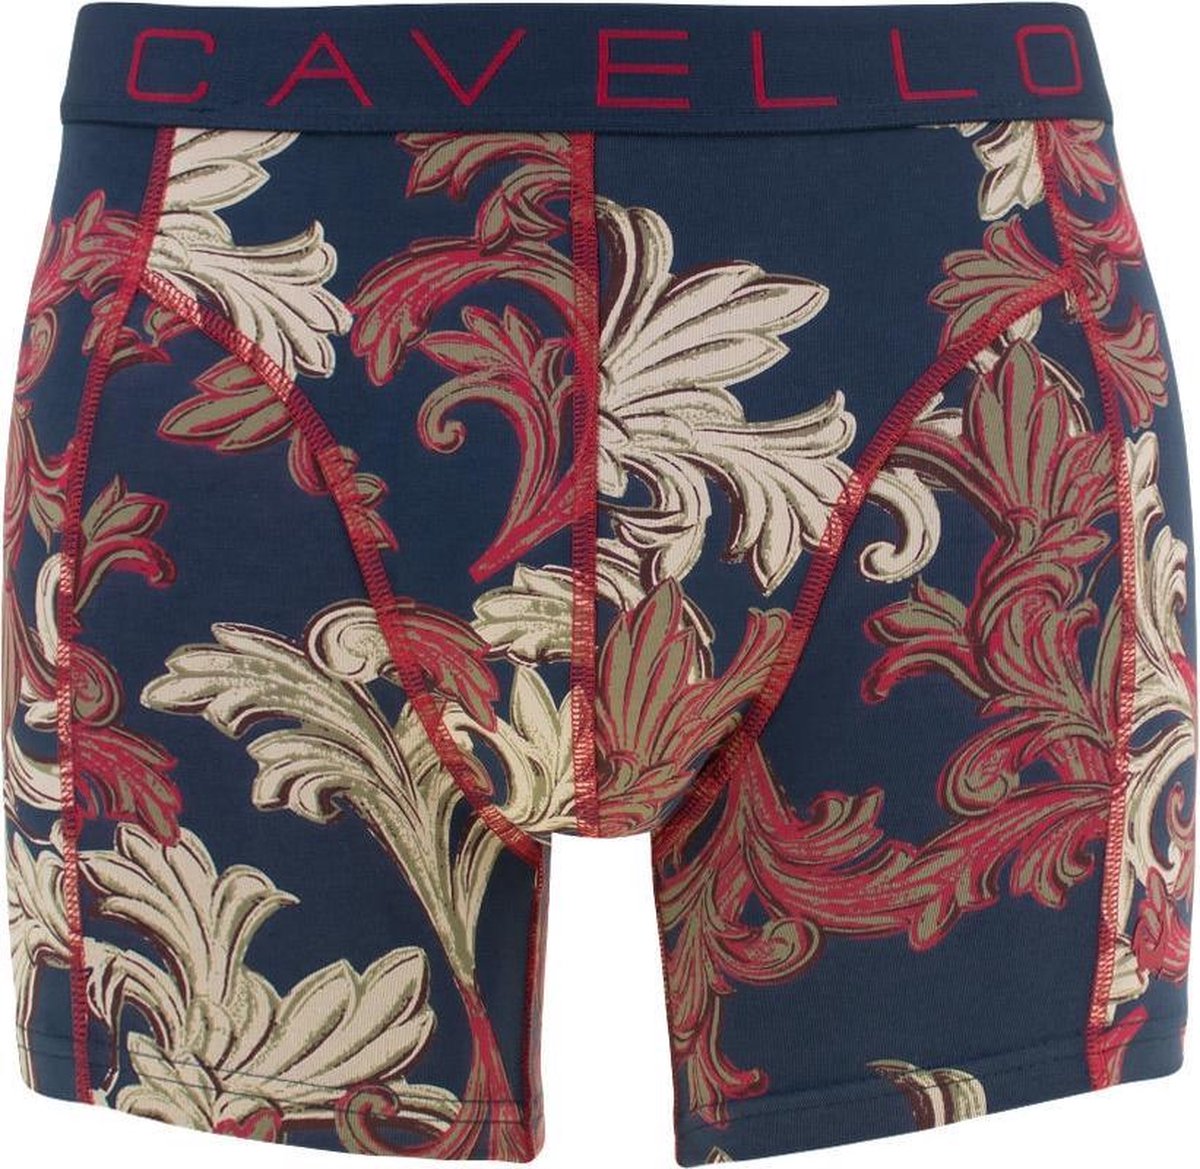 Cavello - Heren - 2-Pack Boxershorts Floral - Blauw - M